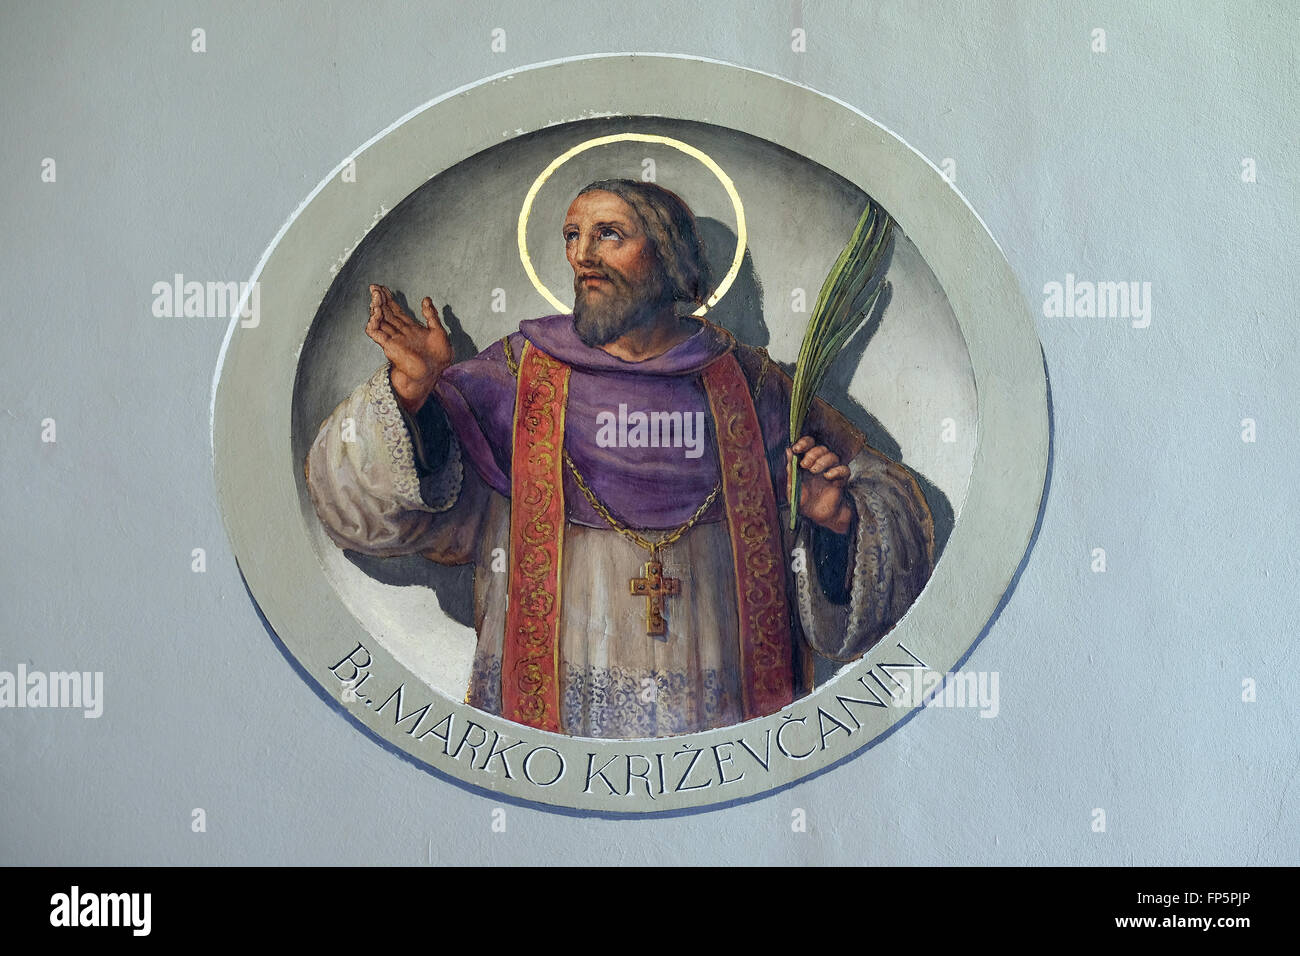 Saint Marko Krizin, fresco in the Basilica of the Sacred Heart of Jesus in Zagreb, Croatia Stock Photo